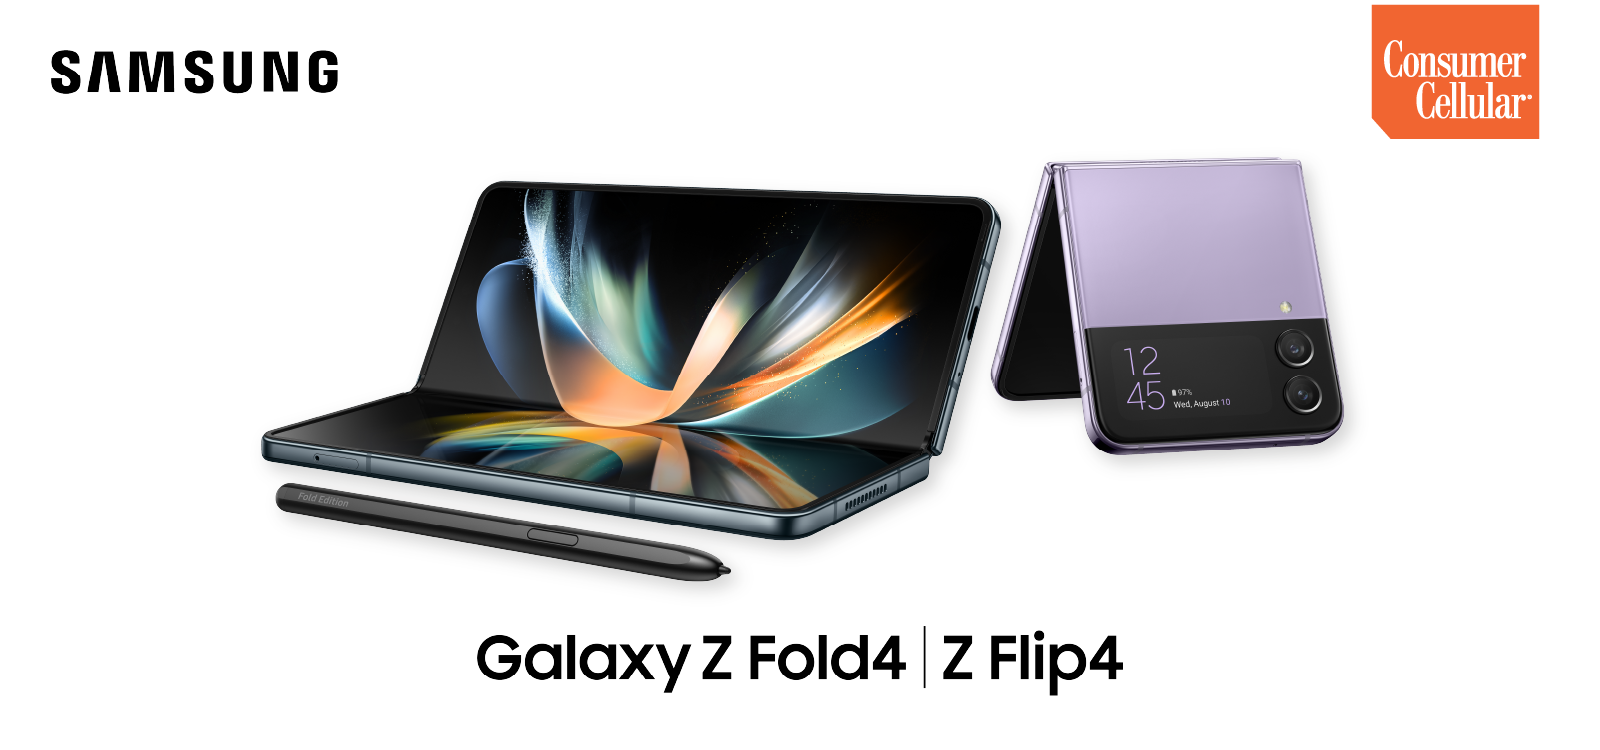 Achat Galaxy Z Fold4 : Prix & Promotion